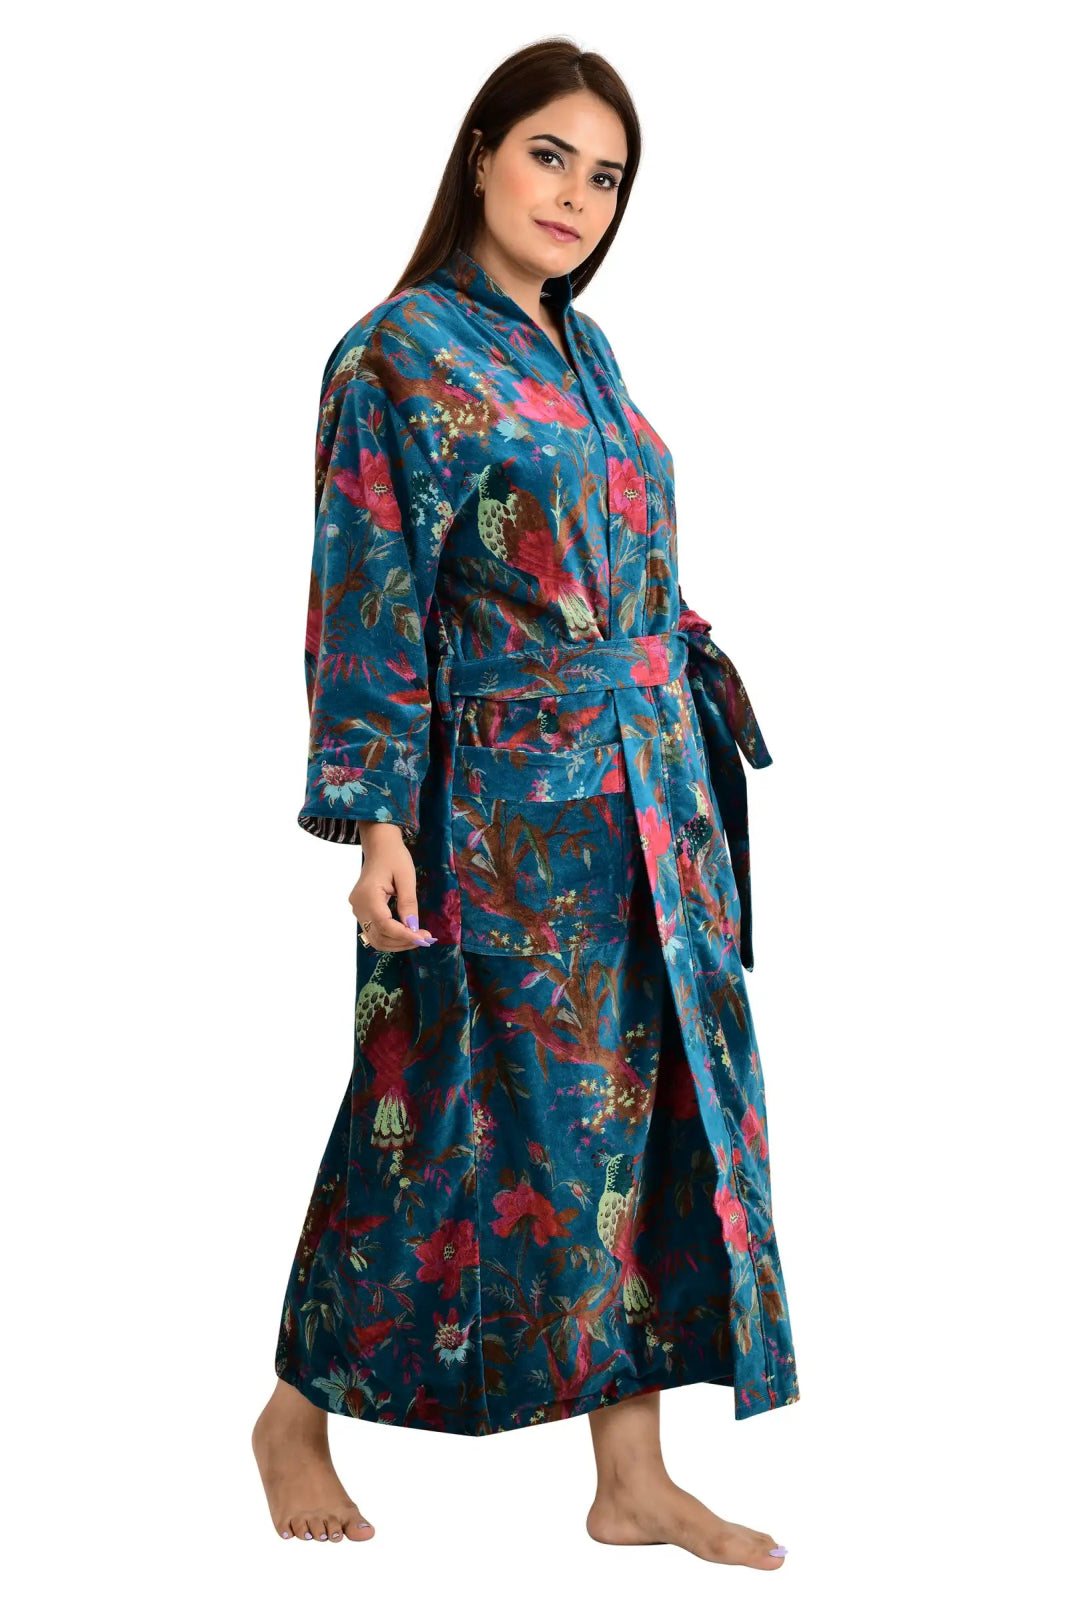 Luxury Velvet House Robe Unisex Kimono Jacket Reversible Silk Lined Autumn Winter Gift Mid Night Blue Botanical Floral Valentine Love - The Eastern Loom